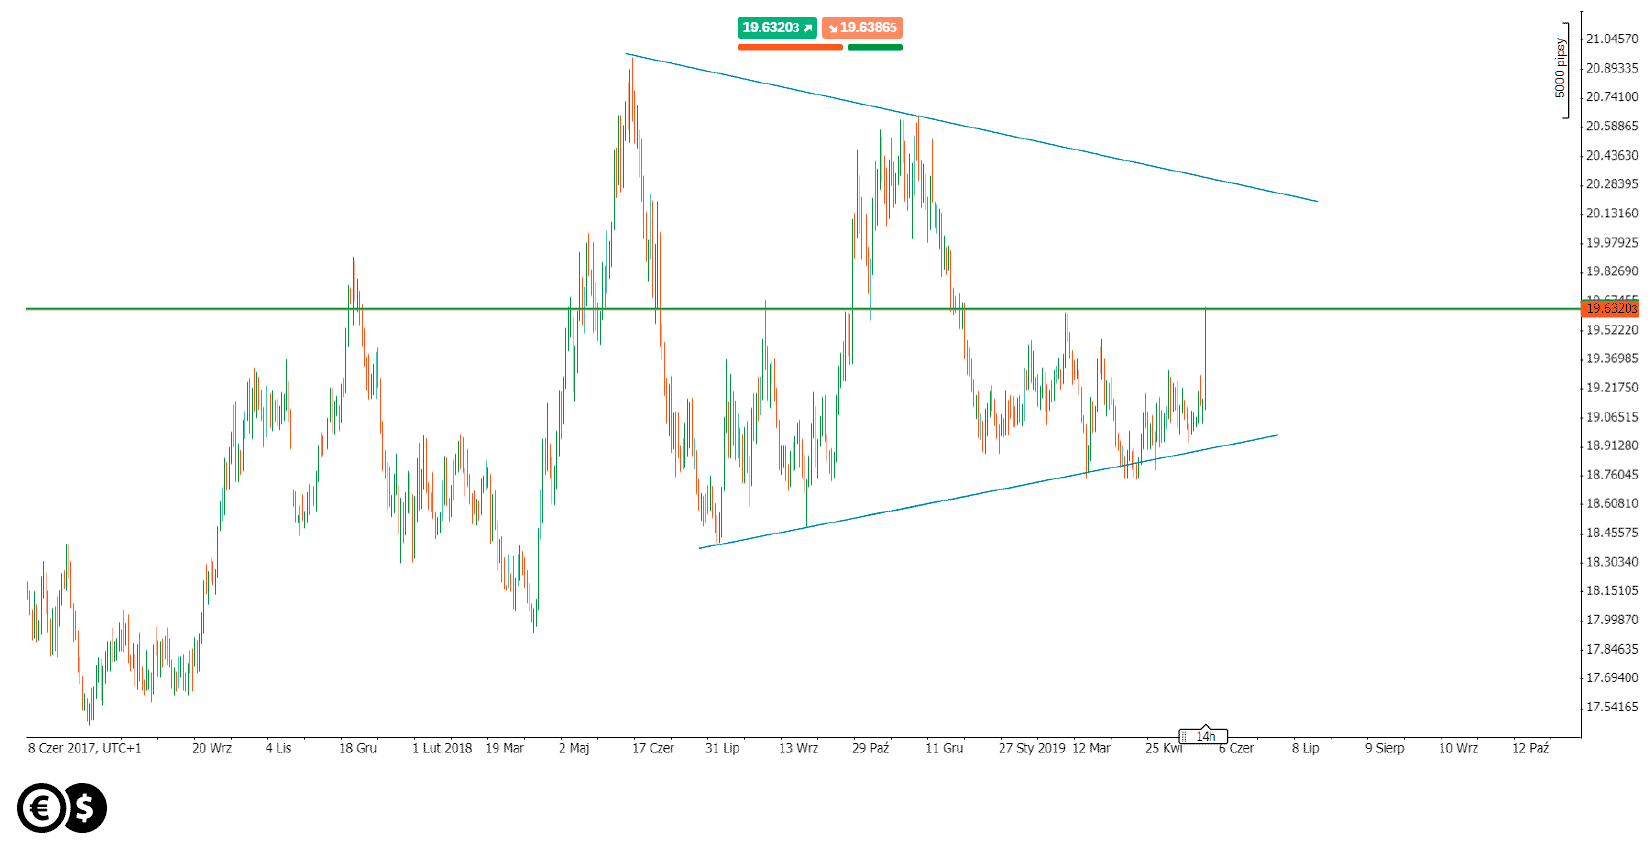 USD/MXN daily chart